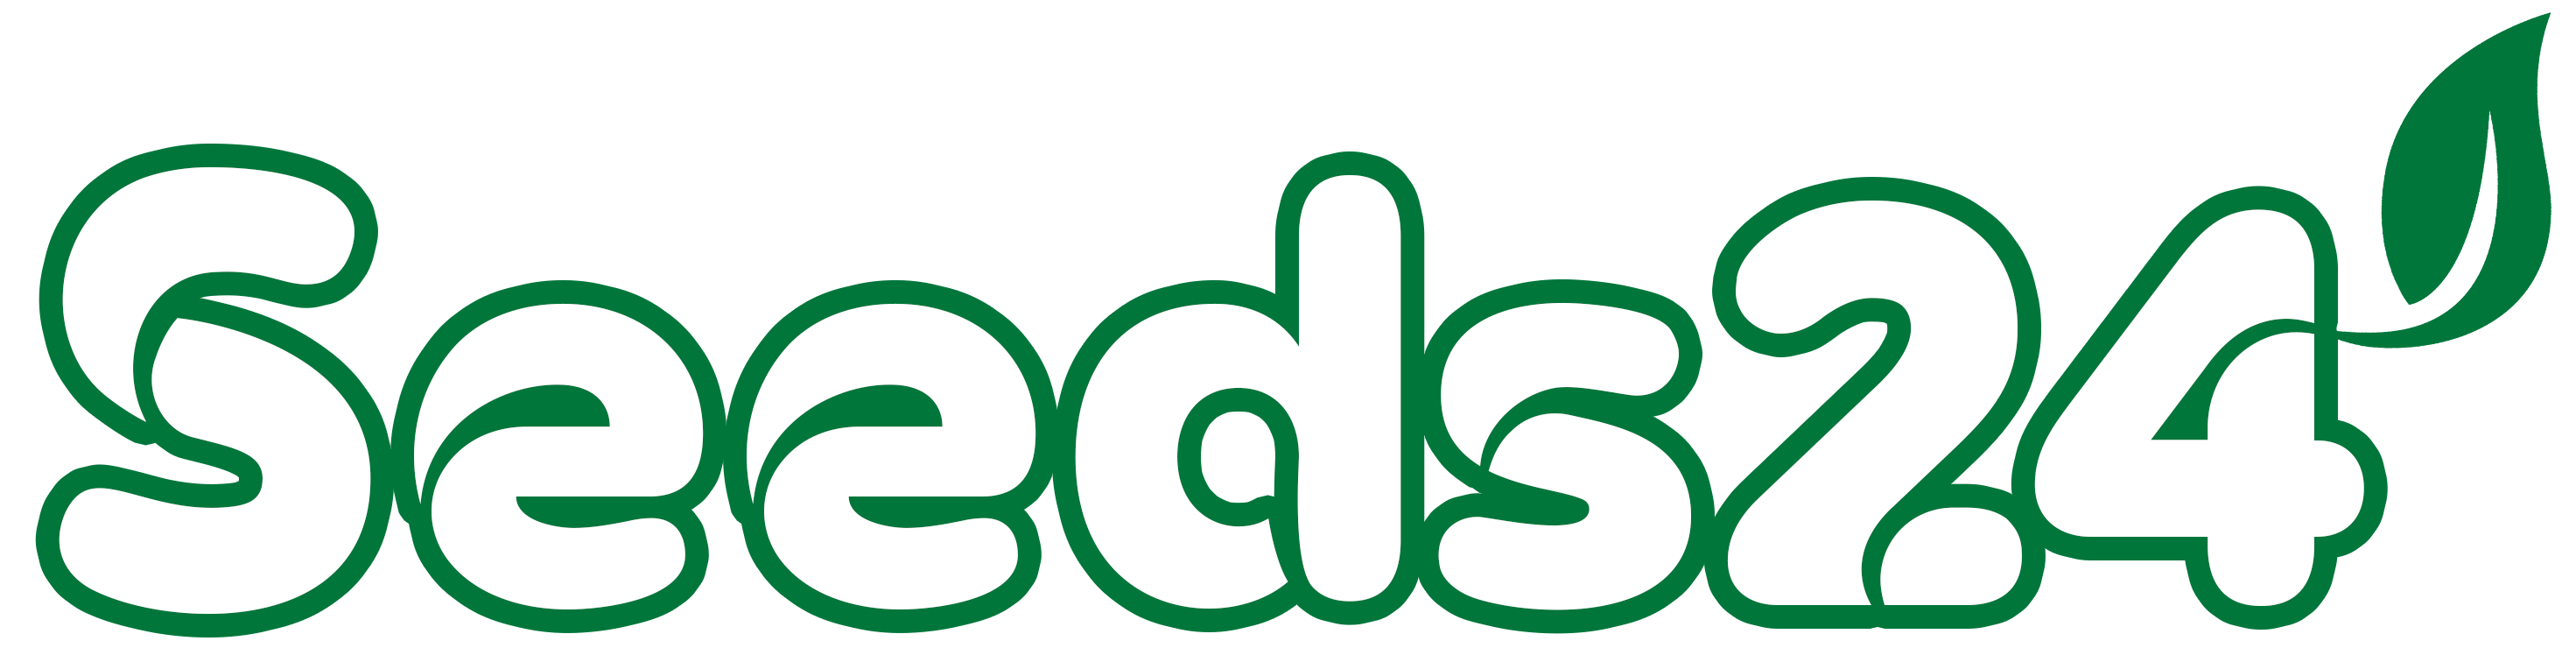 seeds24-logo-2021